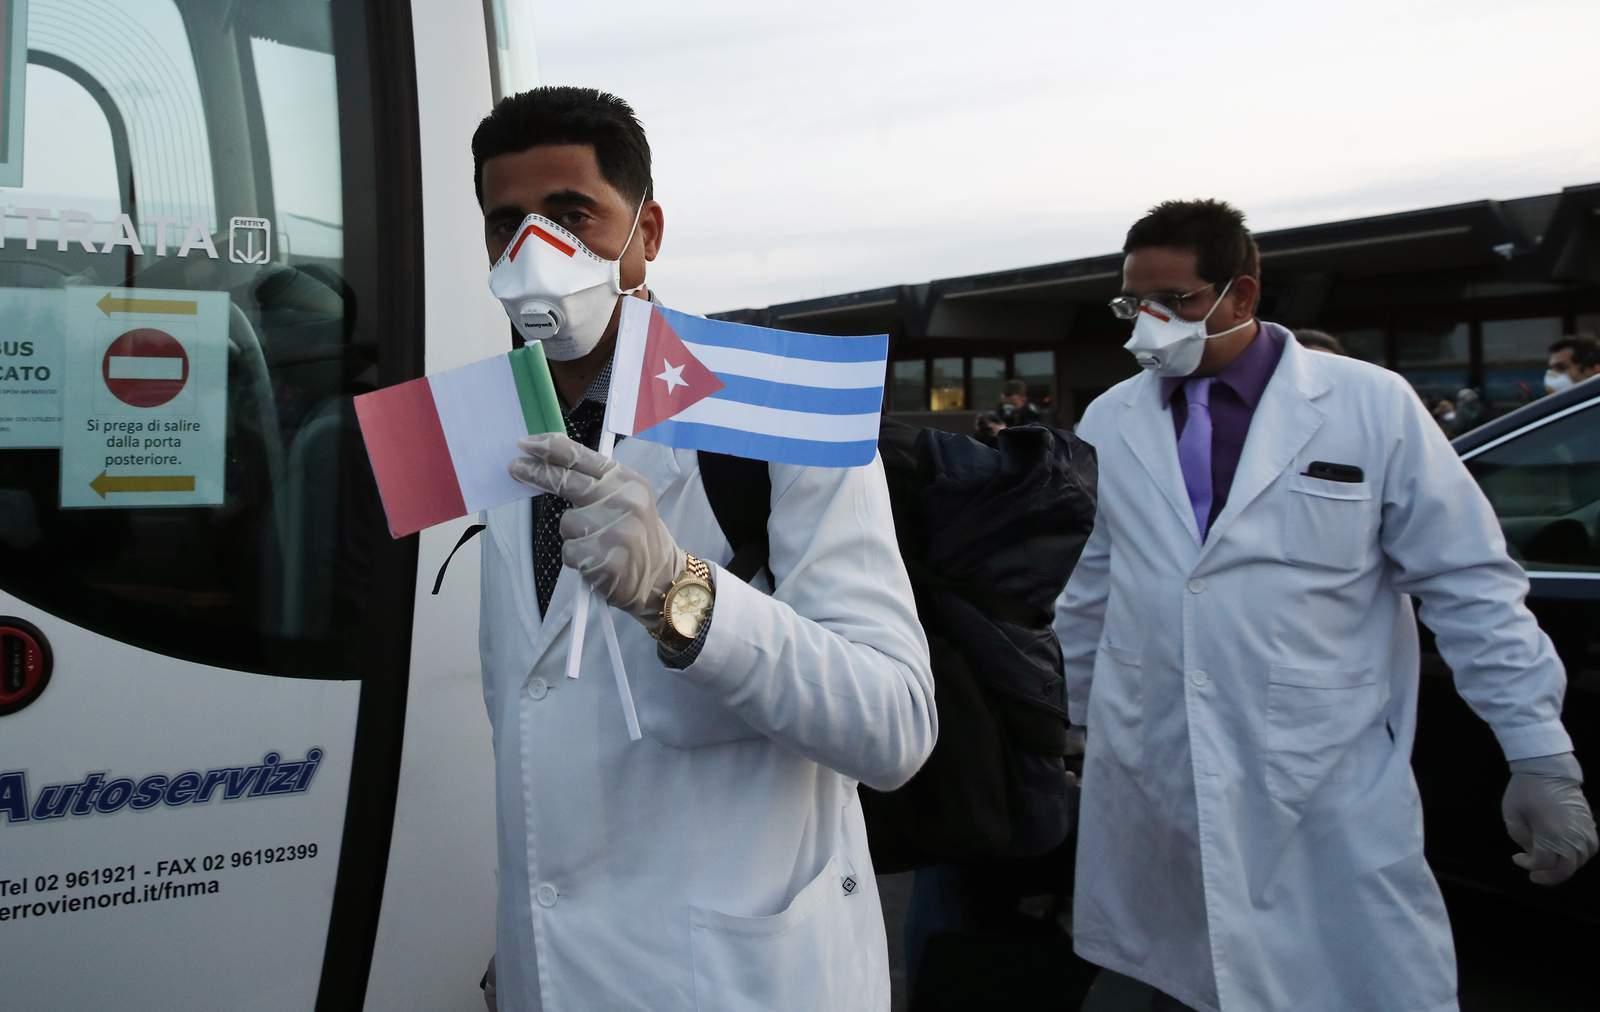 Cuban docs fighting coronavirus around world, defying US